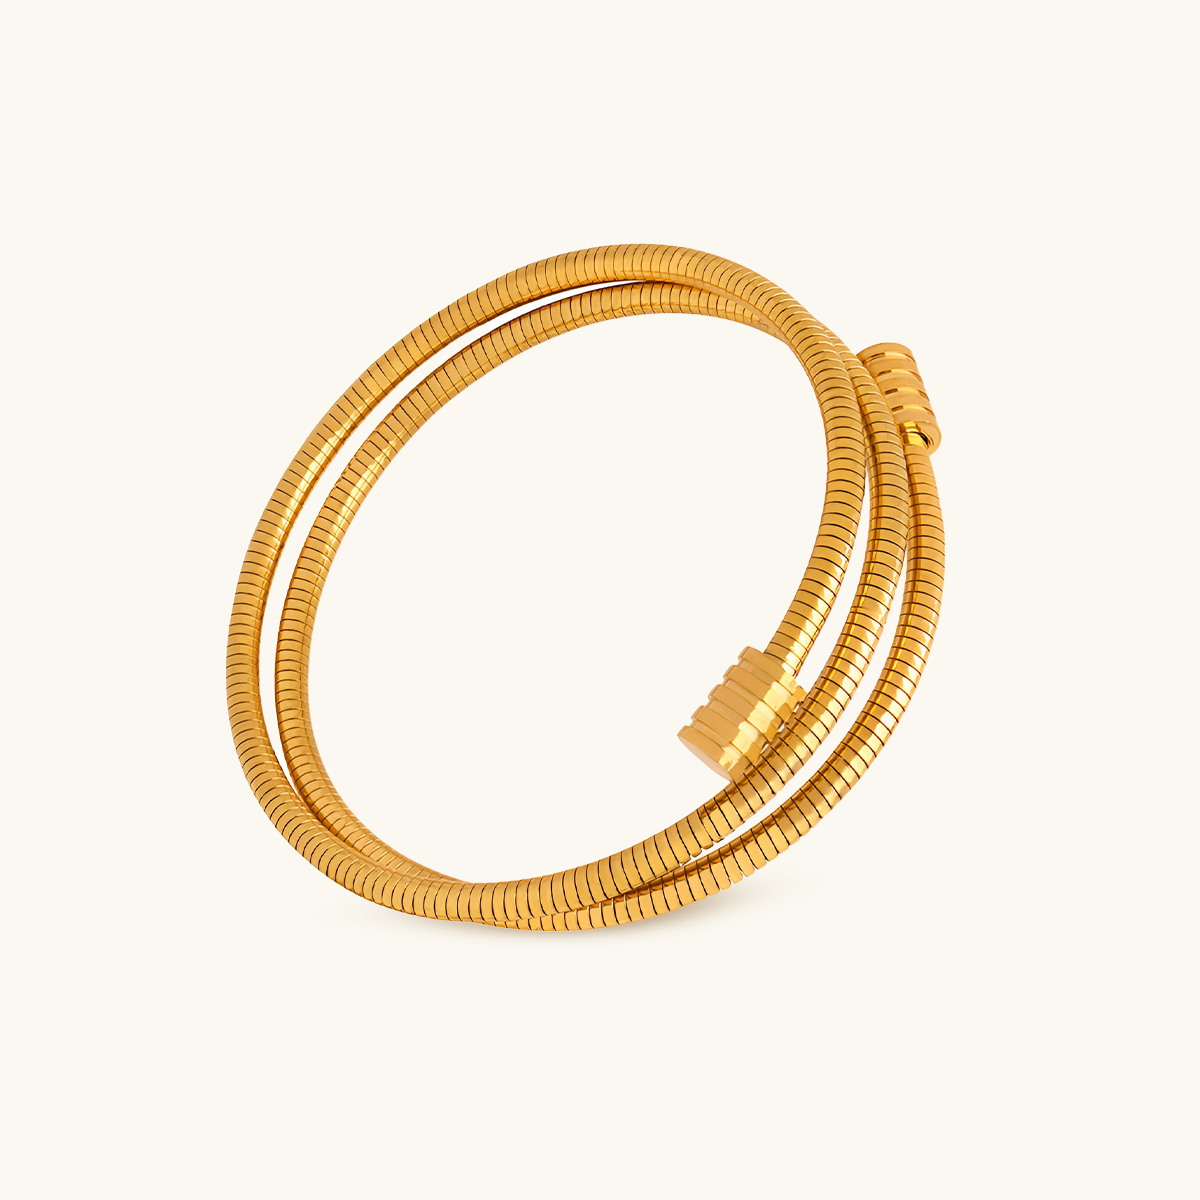 Twister Bangle Bracelet - Gold